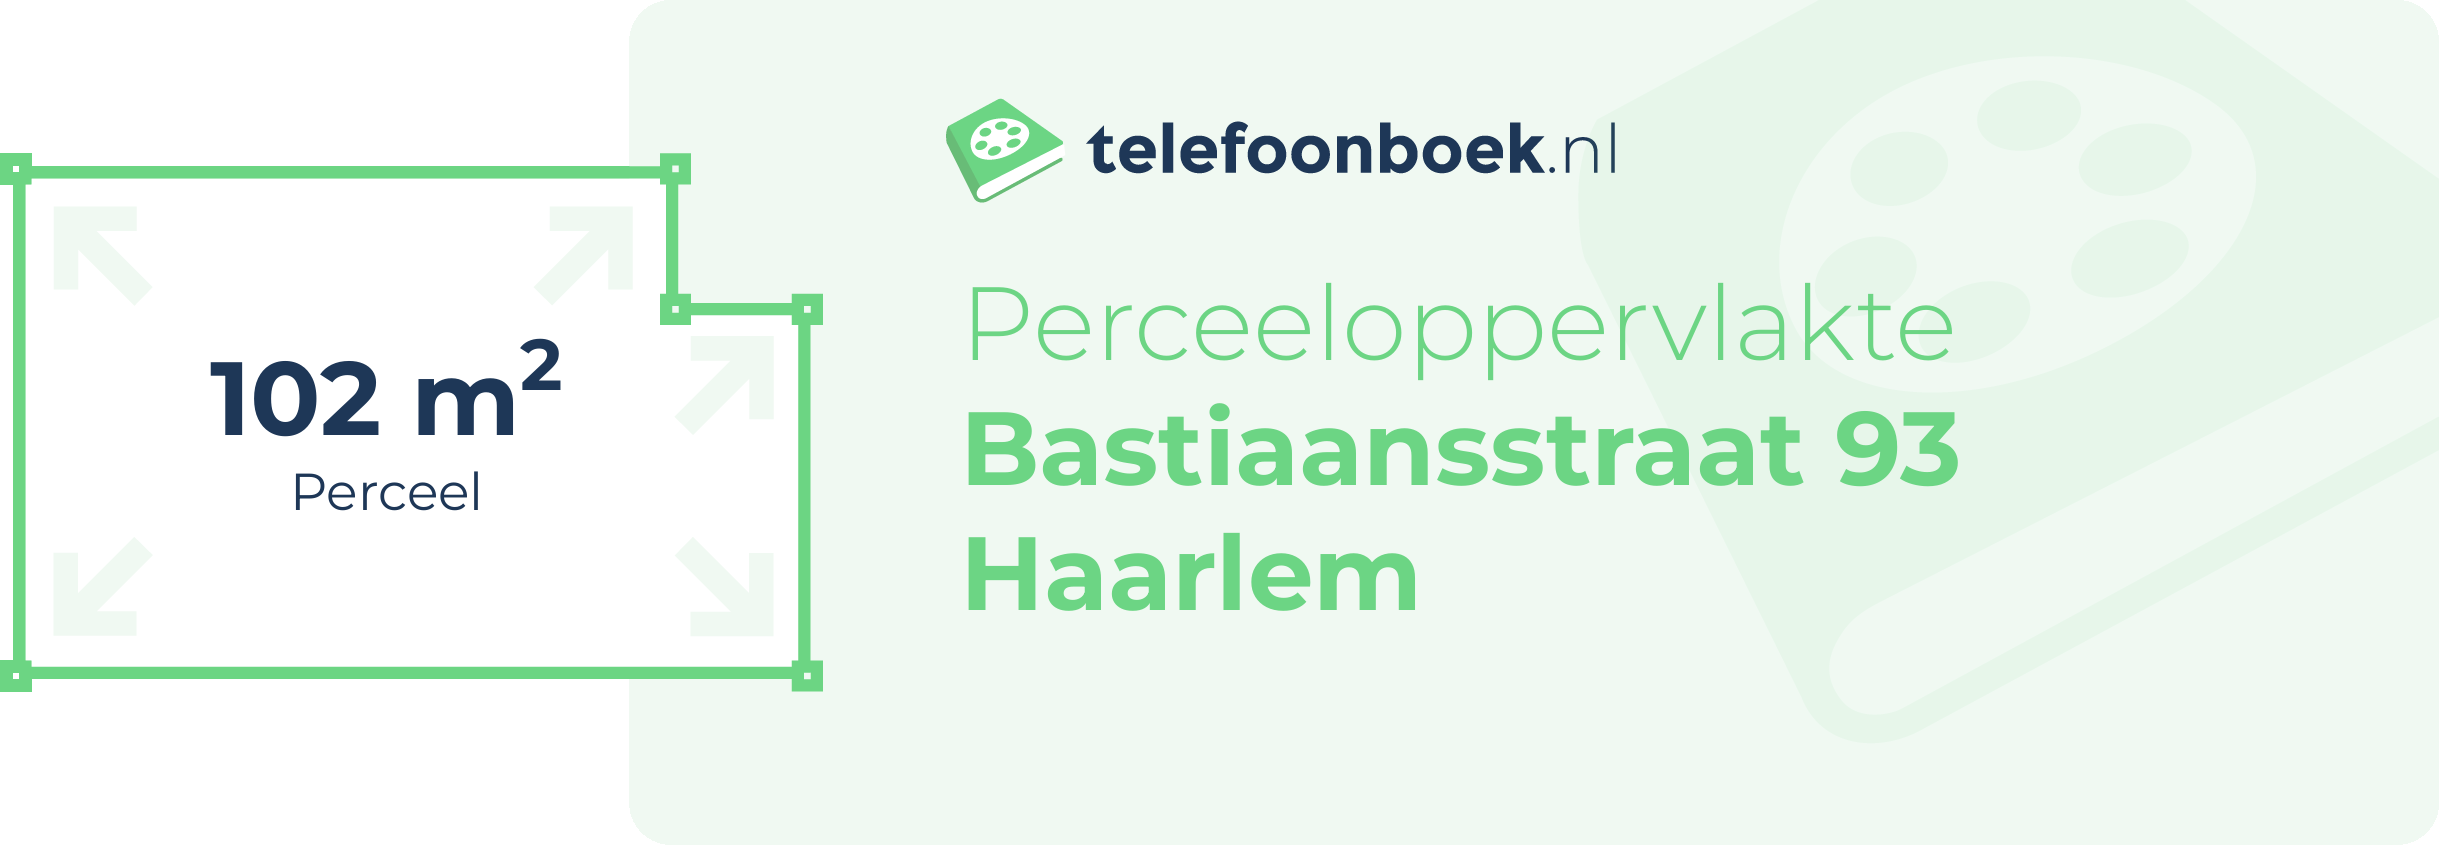 Perceeloppervlakte Bastiaansstraat 93 Haarlem